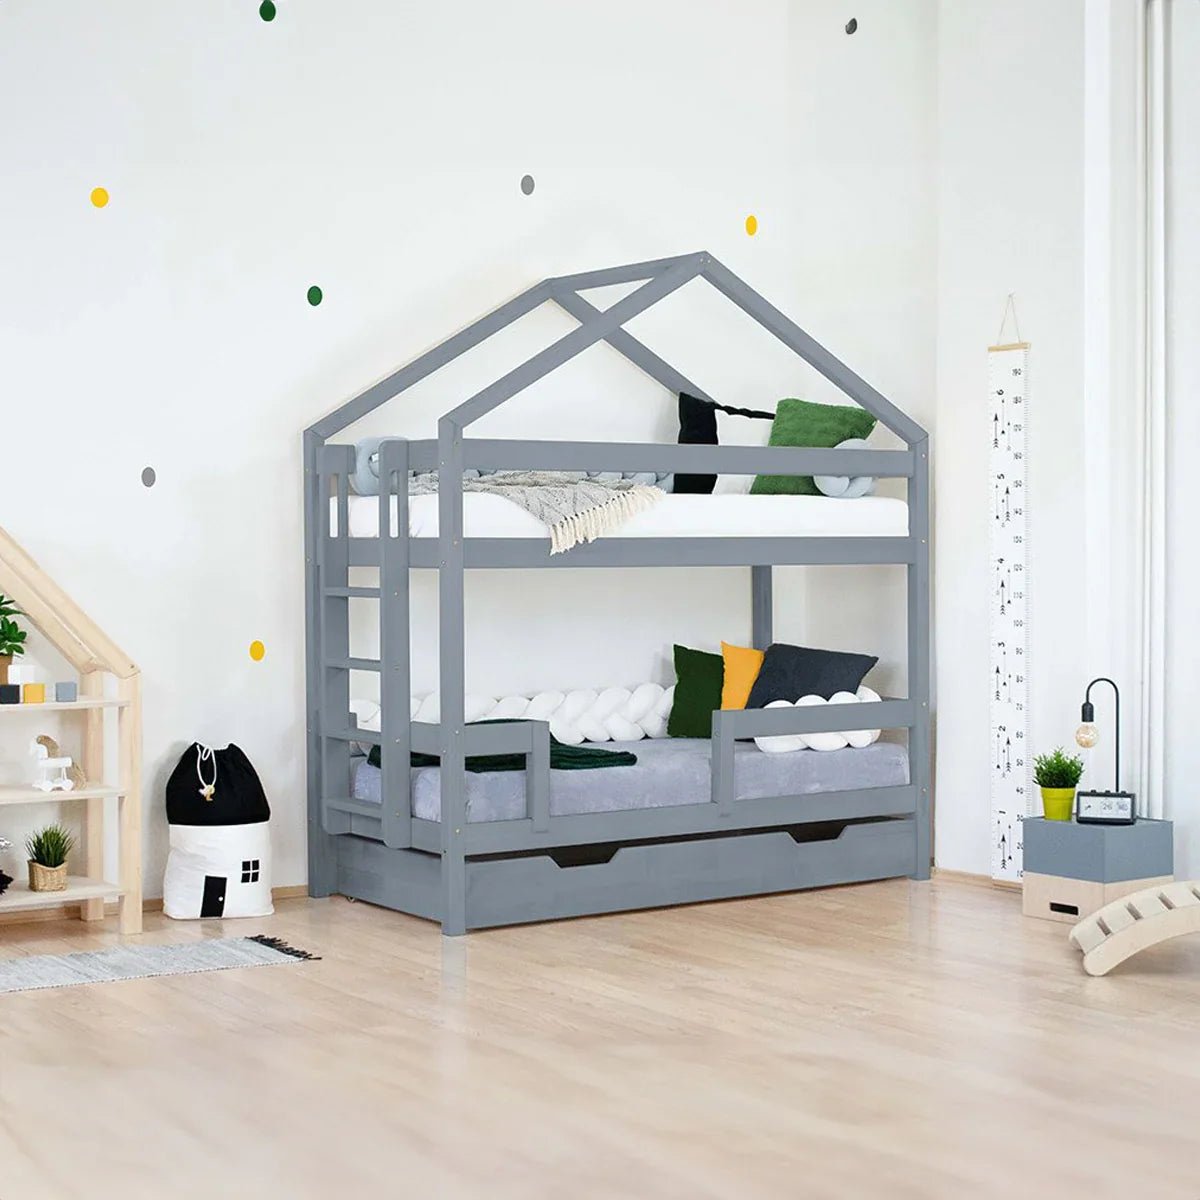 Wooden Children's House Bunk Bed KILI - Grey